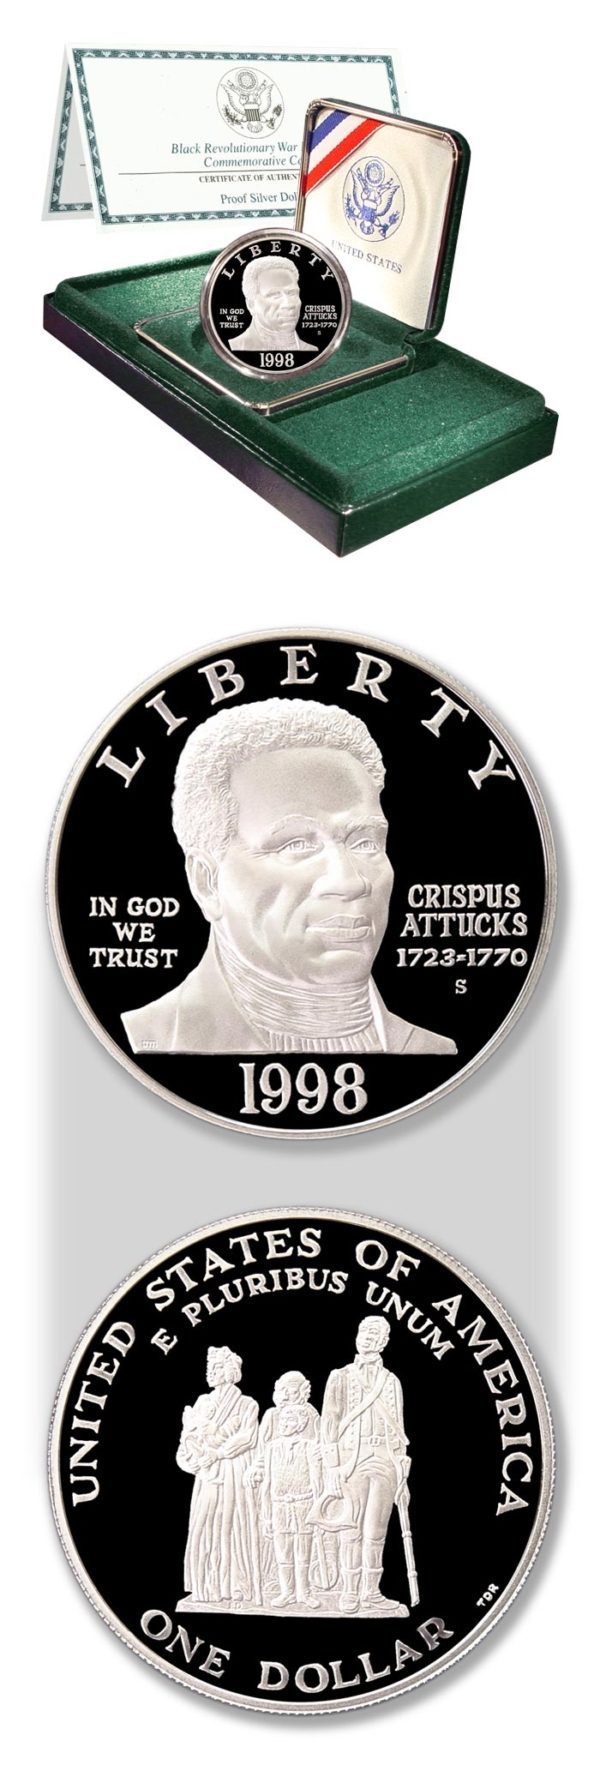 USA - Black Revolutionary War Patriots - Commemorative Silver Dollar - 1998 - Proof  - Mint Box & CO